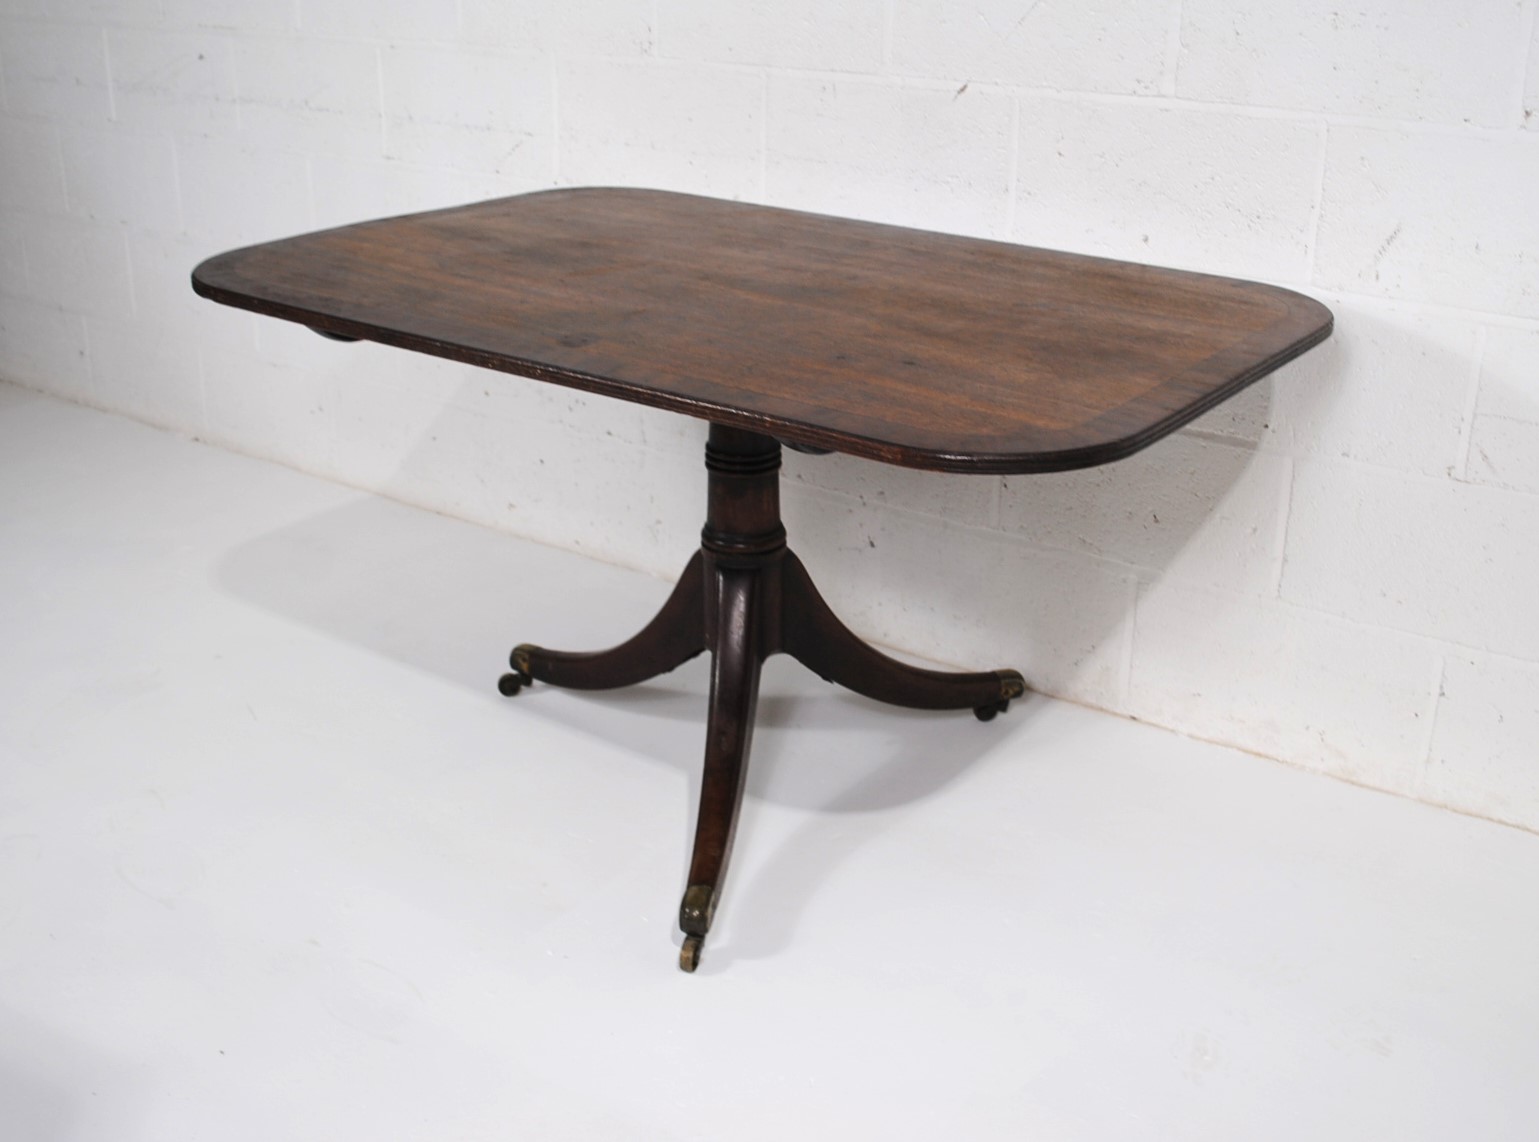 A Georgian mahogany rectangular tilt-top tripod table, with reeded edge - length 132cm, depth 87. - Image 3 of 5